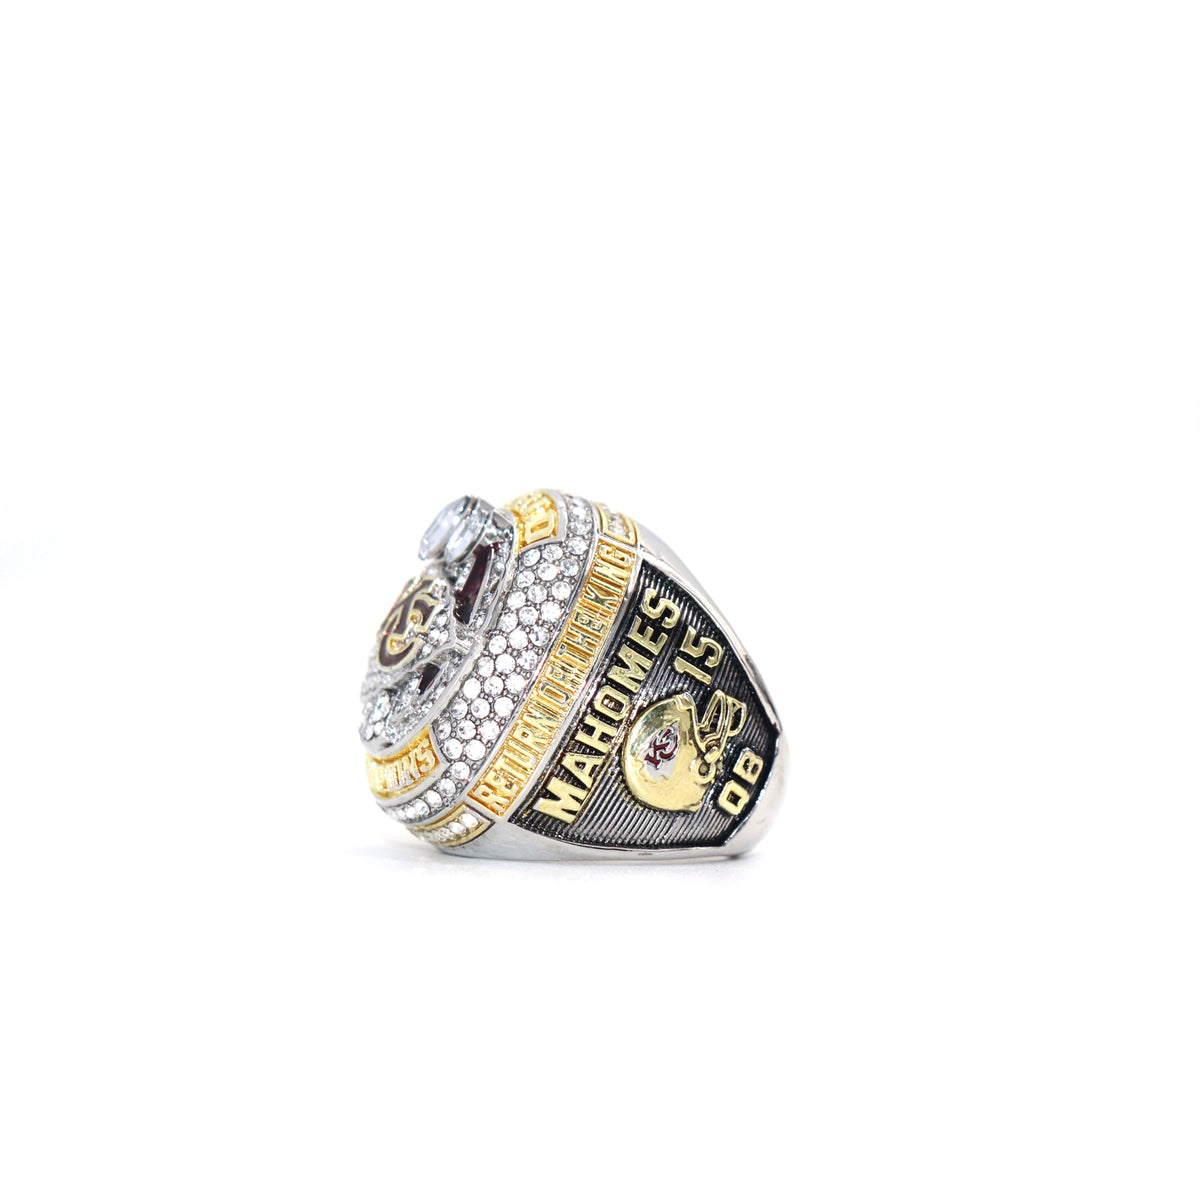 Kansas City Chiefs Super Bowl LVII Champions Diamond Ring shirt